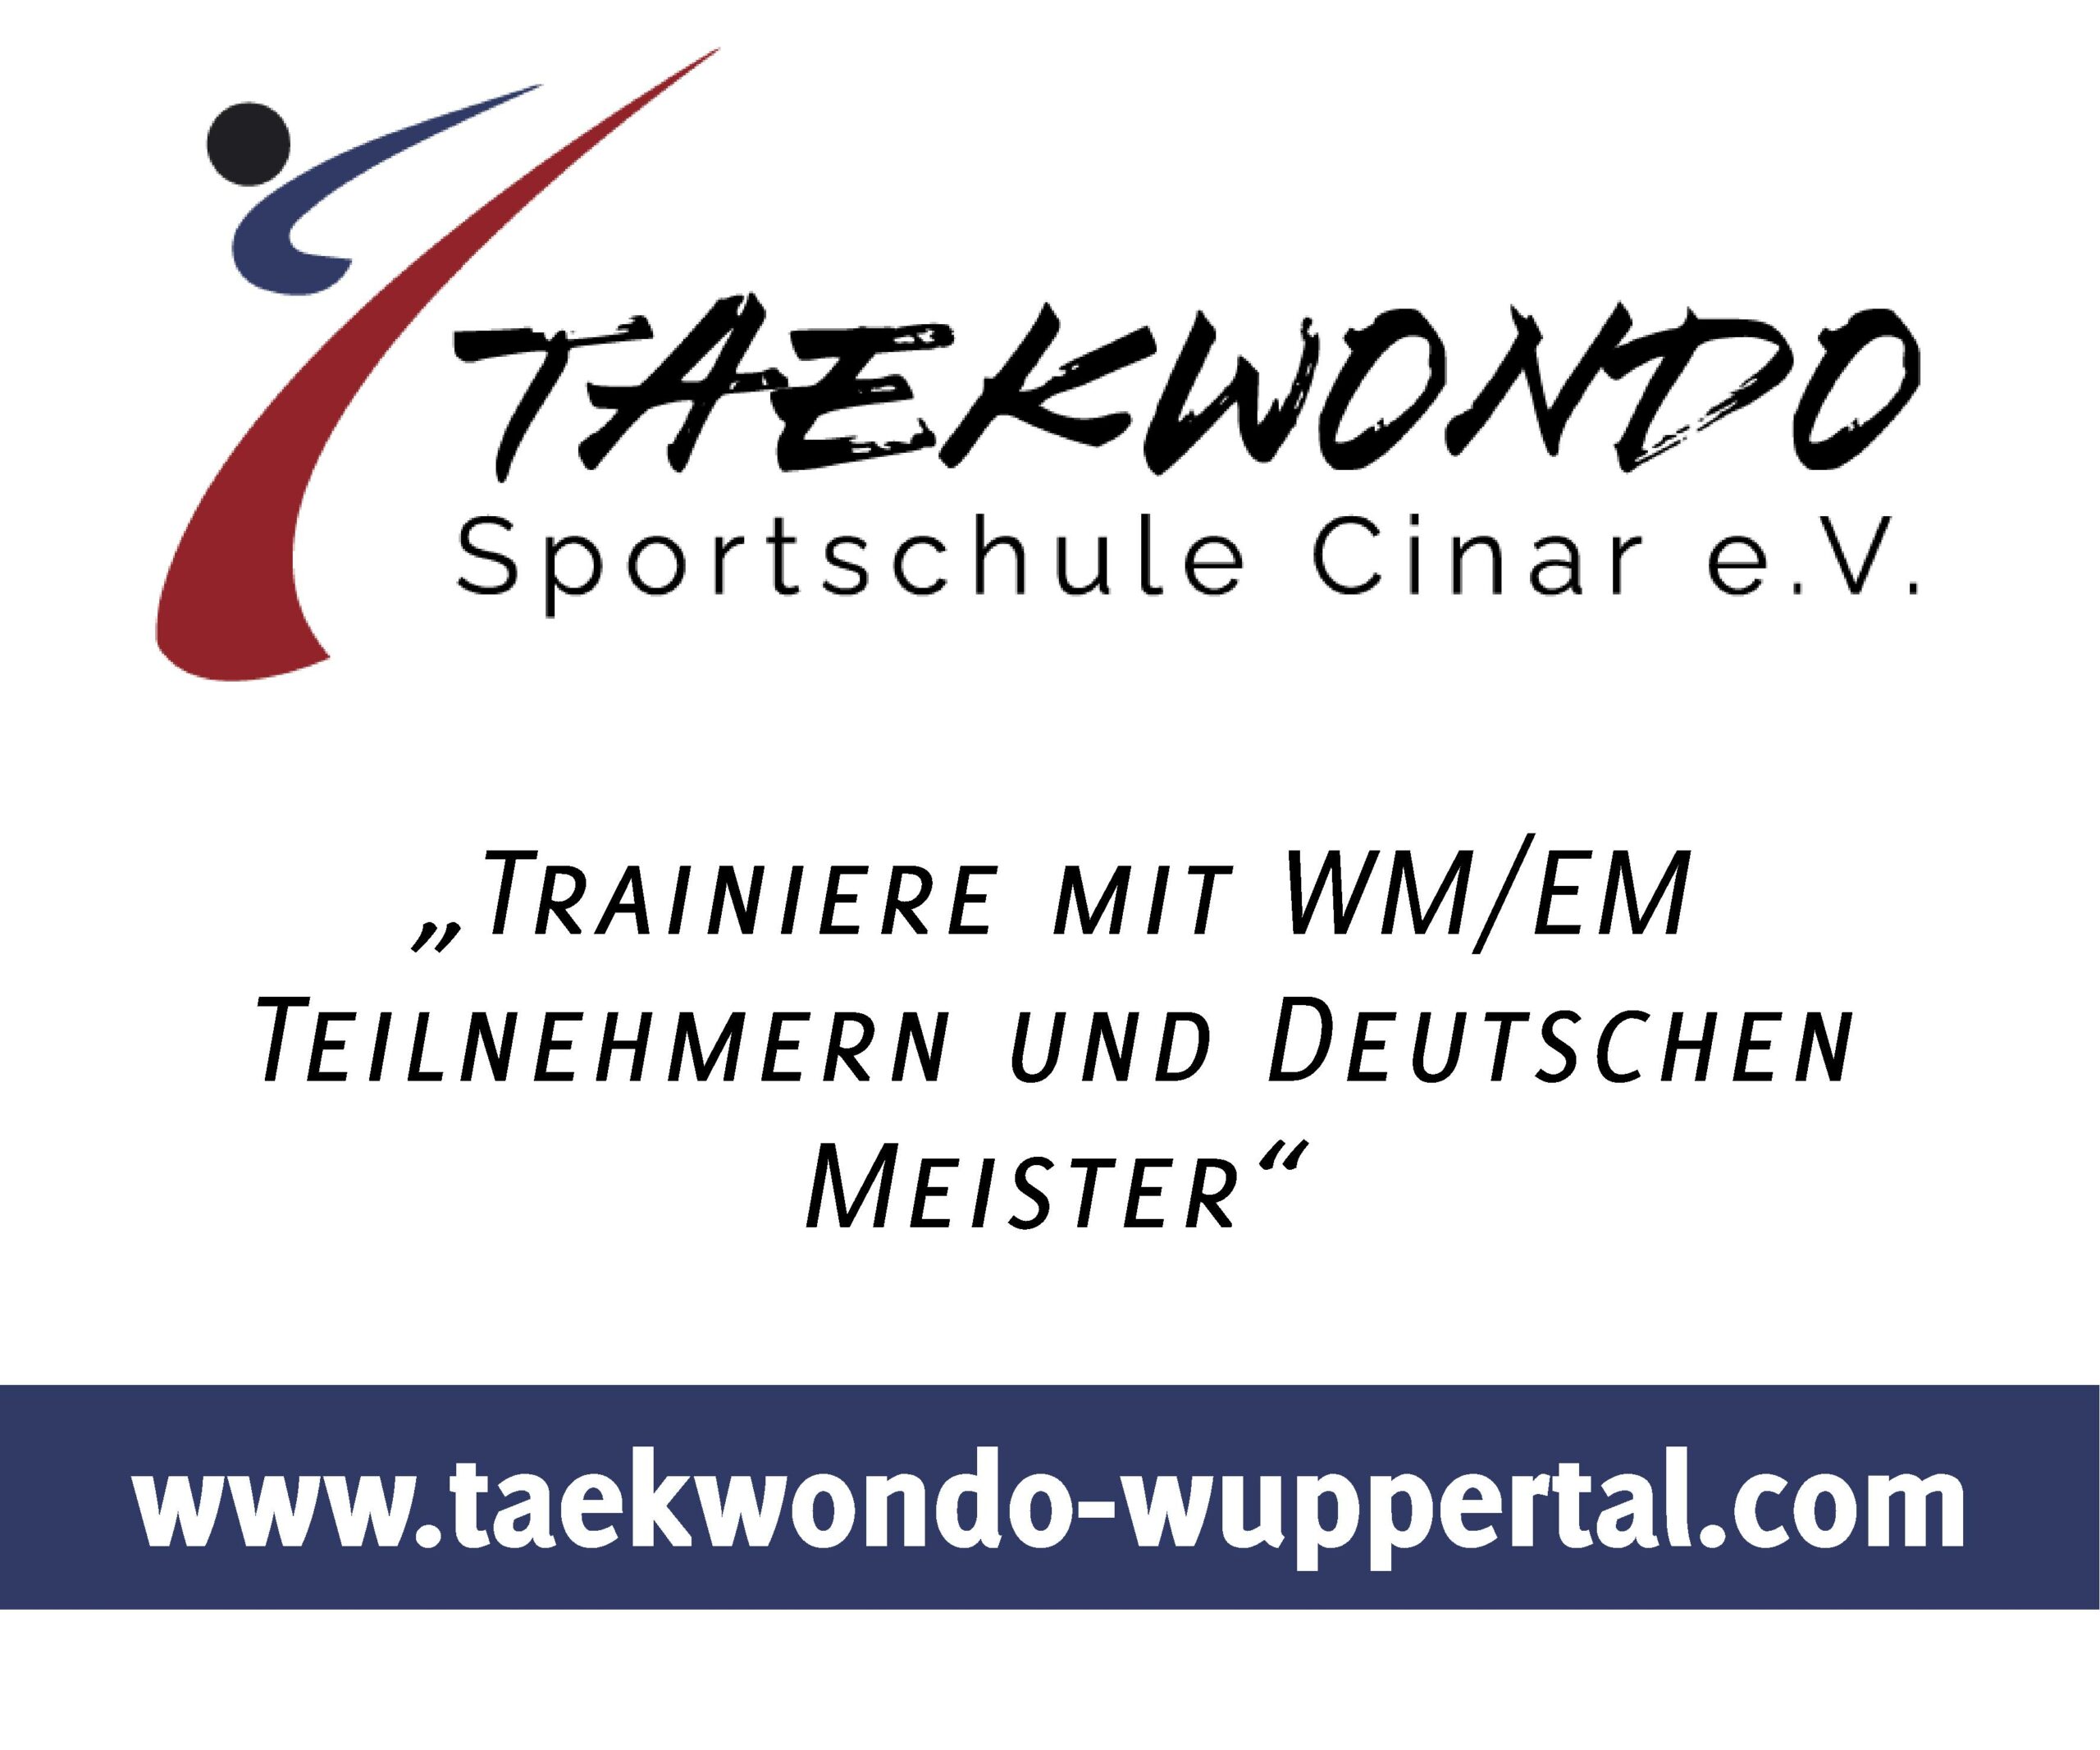 Taekwondo Sportschule Cinar - Wuppertal